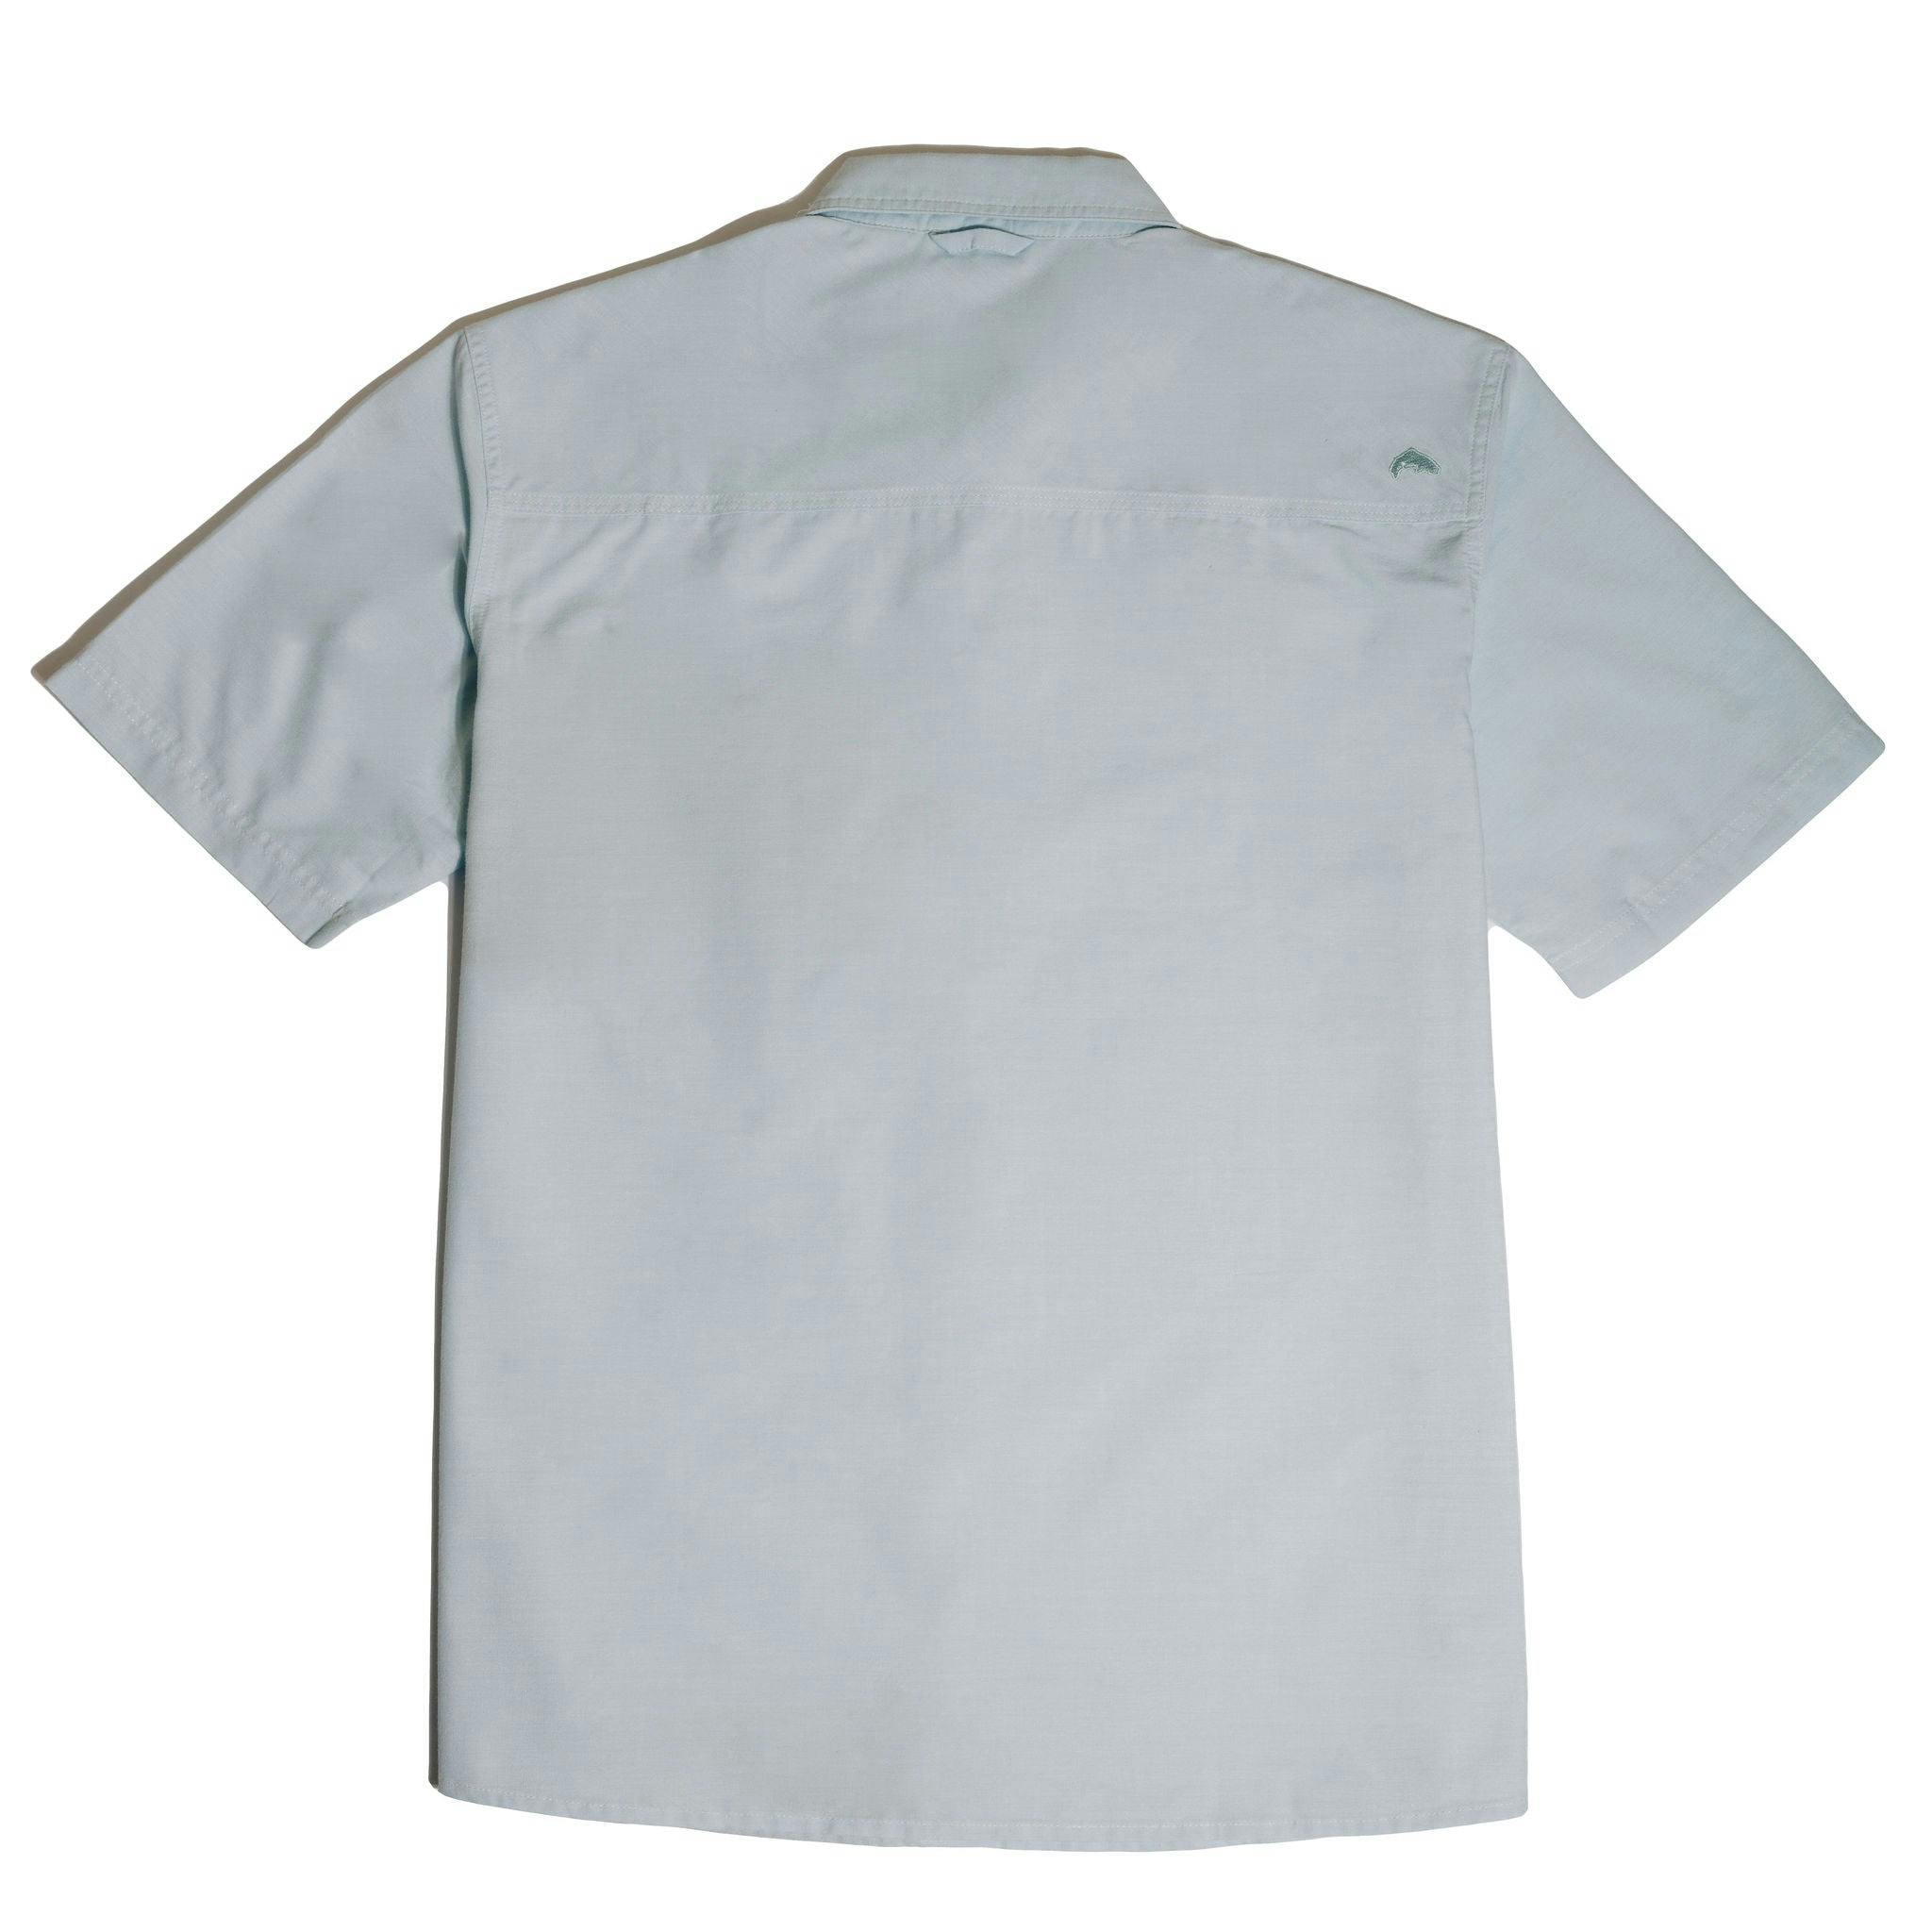 Sierra Nevada Brewing Co. X Simms Cutbank Chambray Short Sleeve Shirt - back view